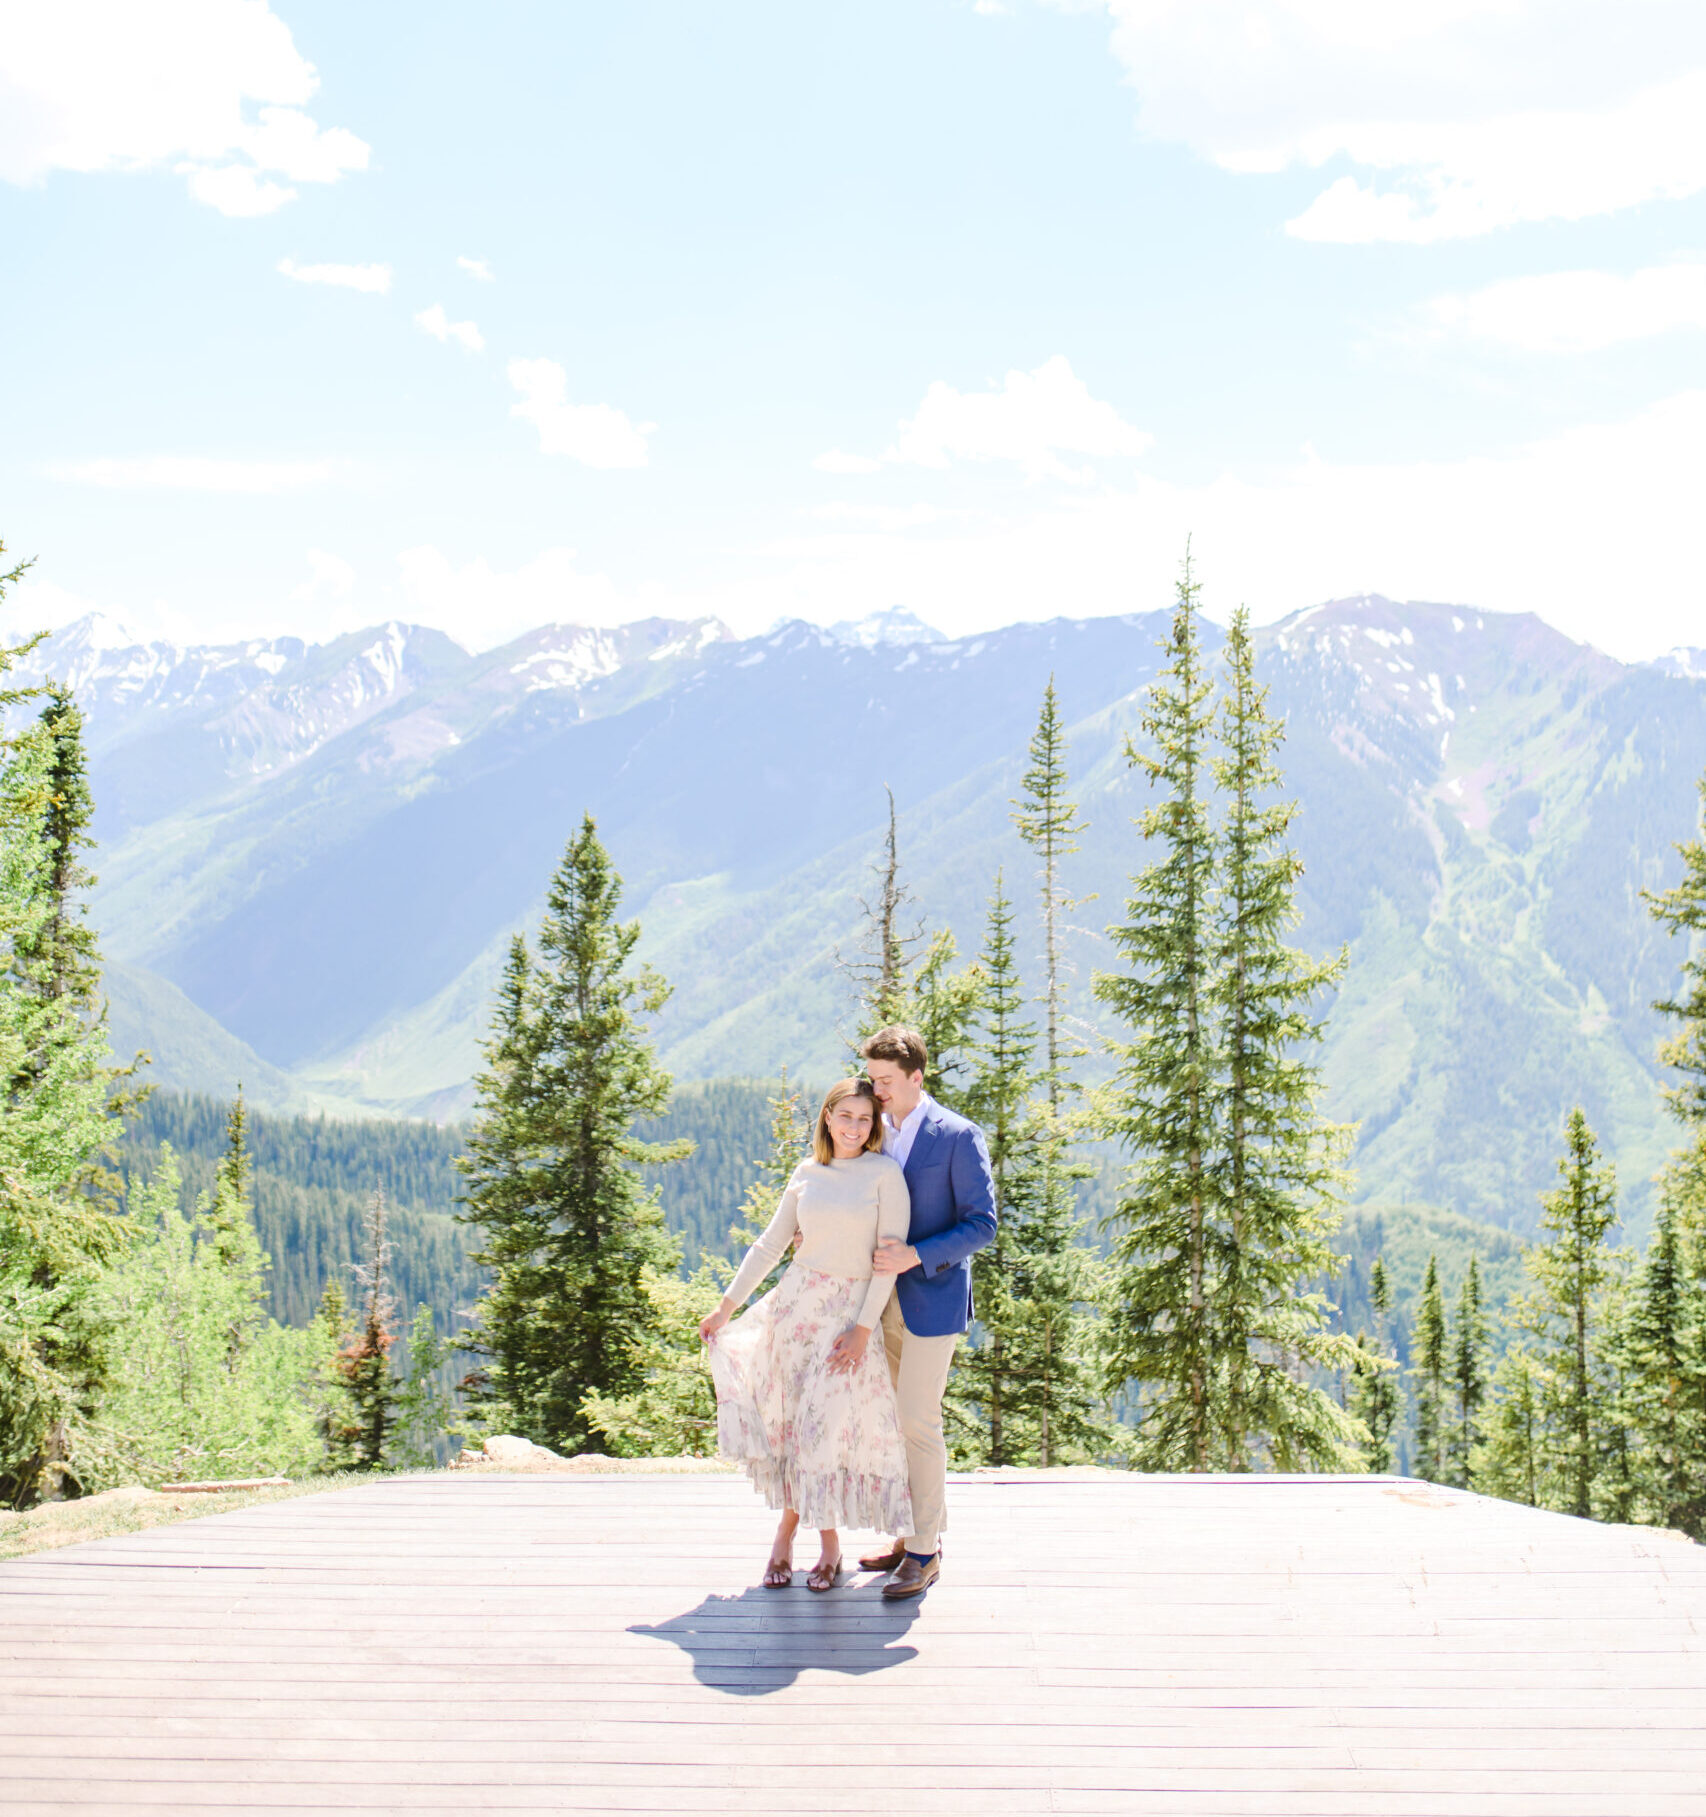 Aspen Wedding Photographer, MaggShots Photography, The Little Nell Wedding Deck, Aspen Colorado